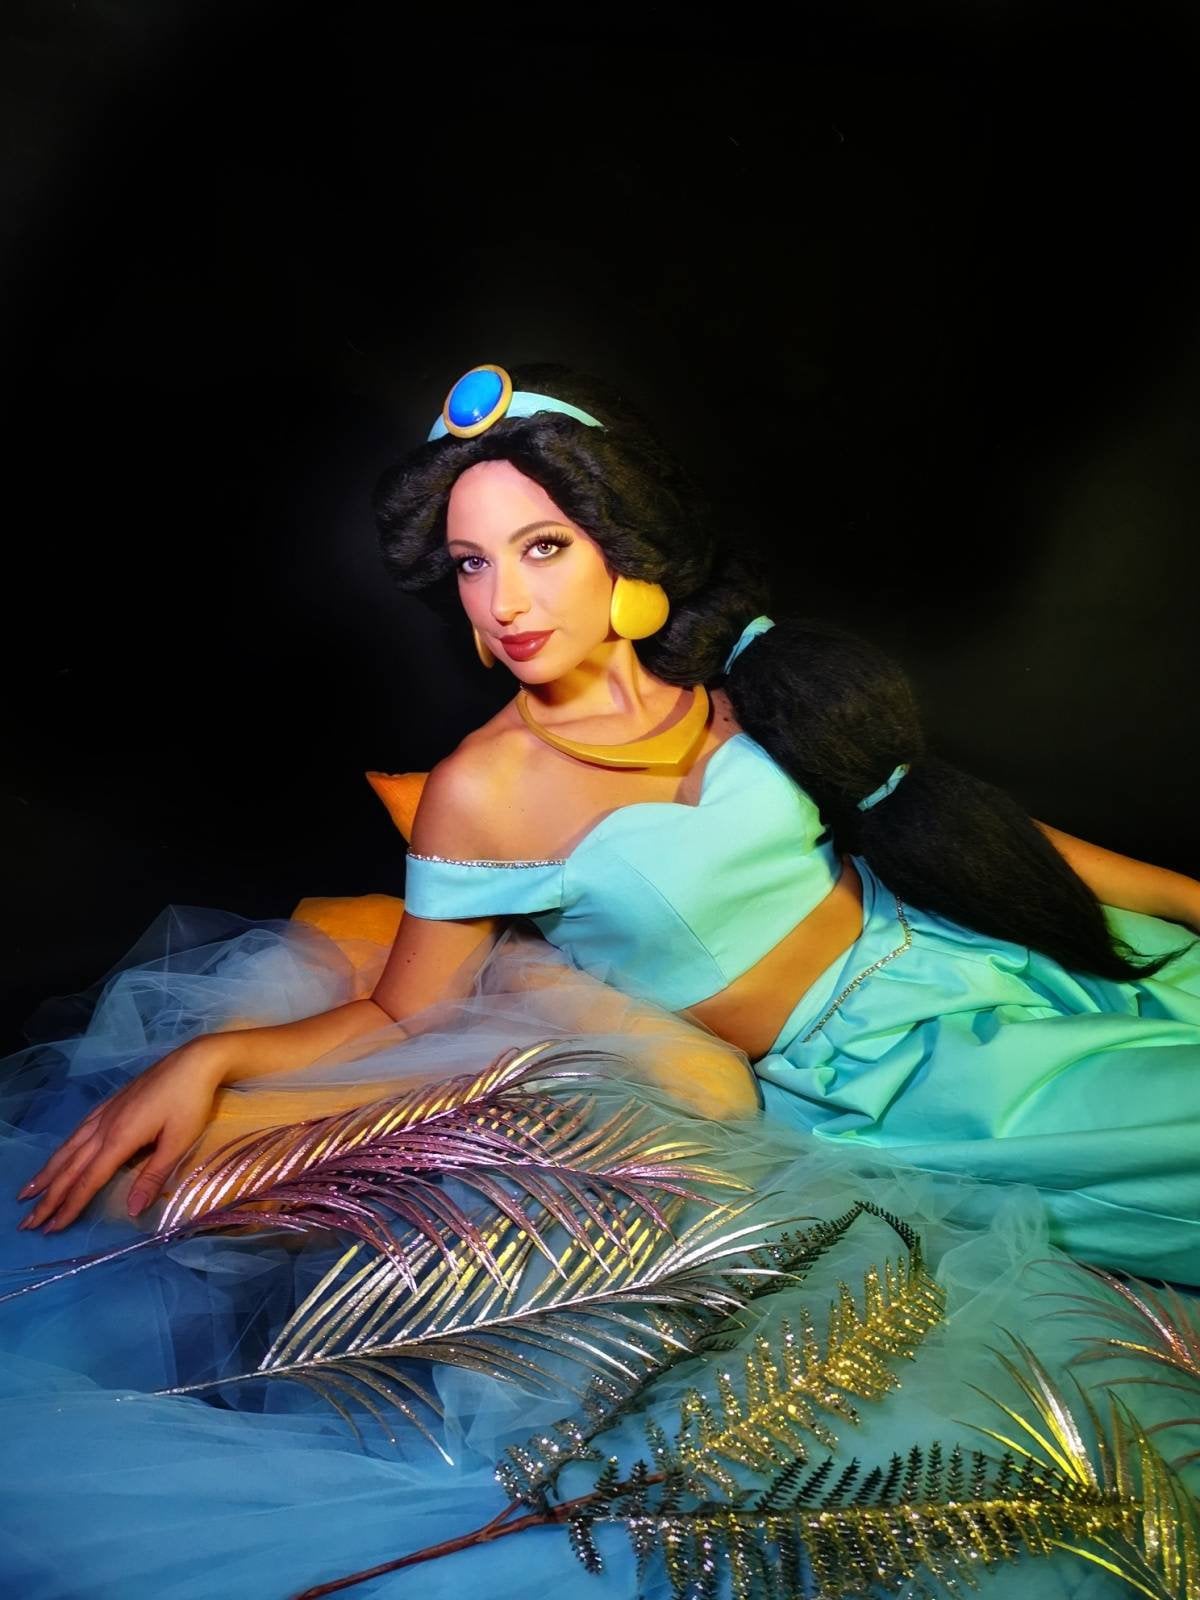  Disfraz de princesa Jasmine de anime, cosplay latino